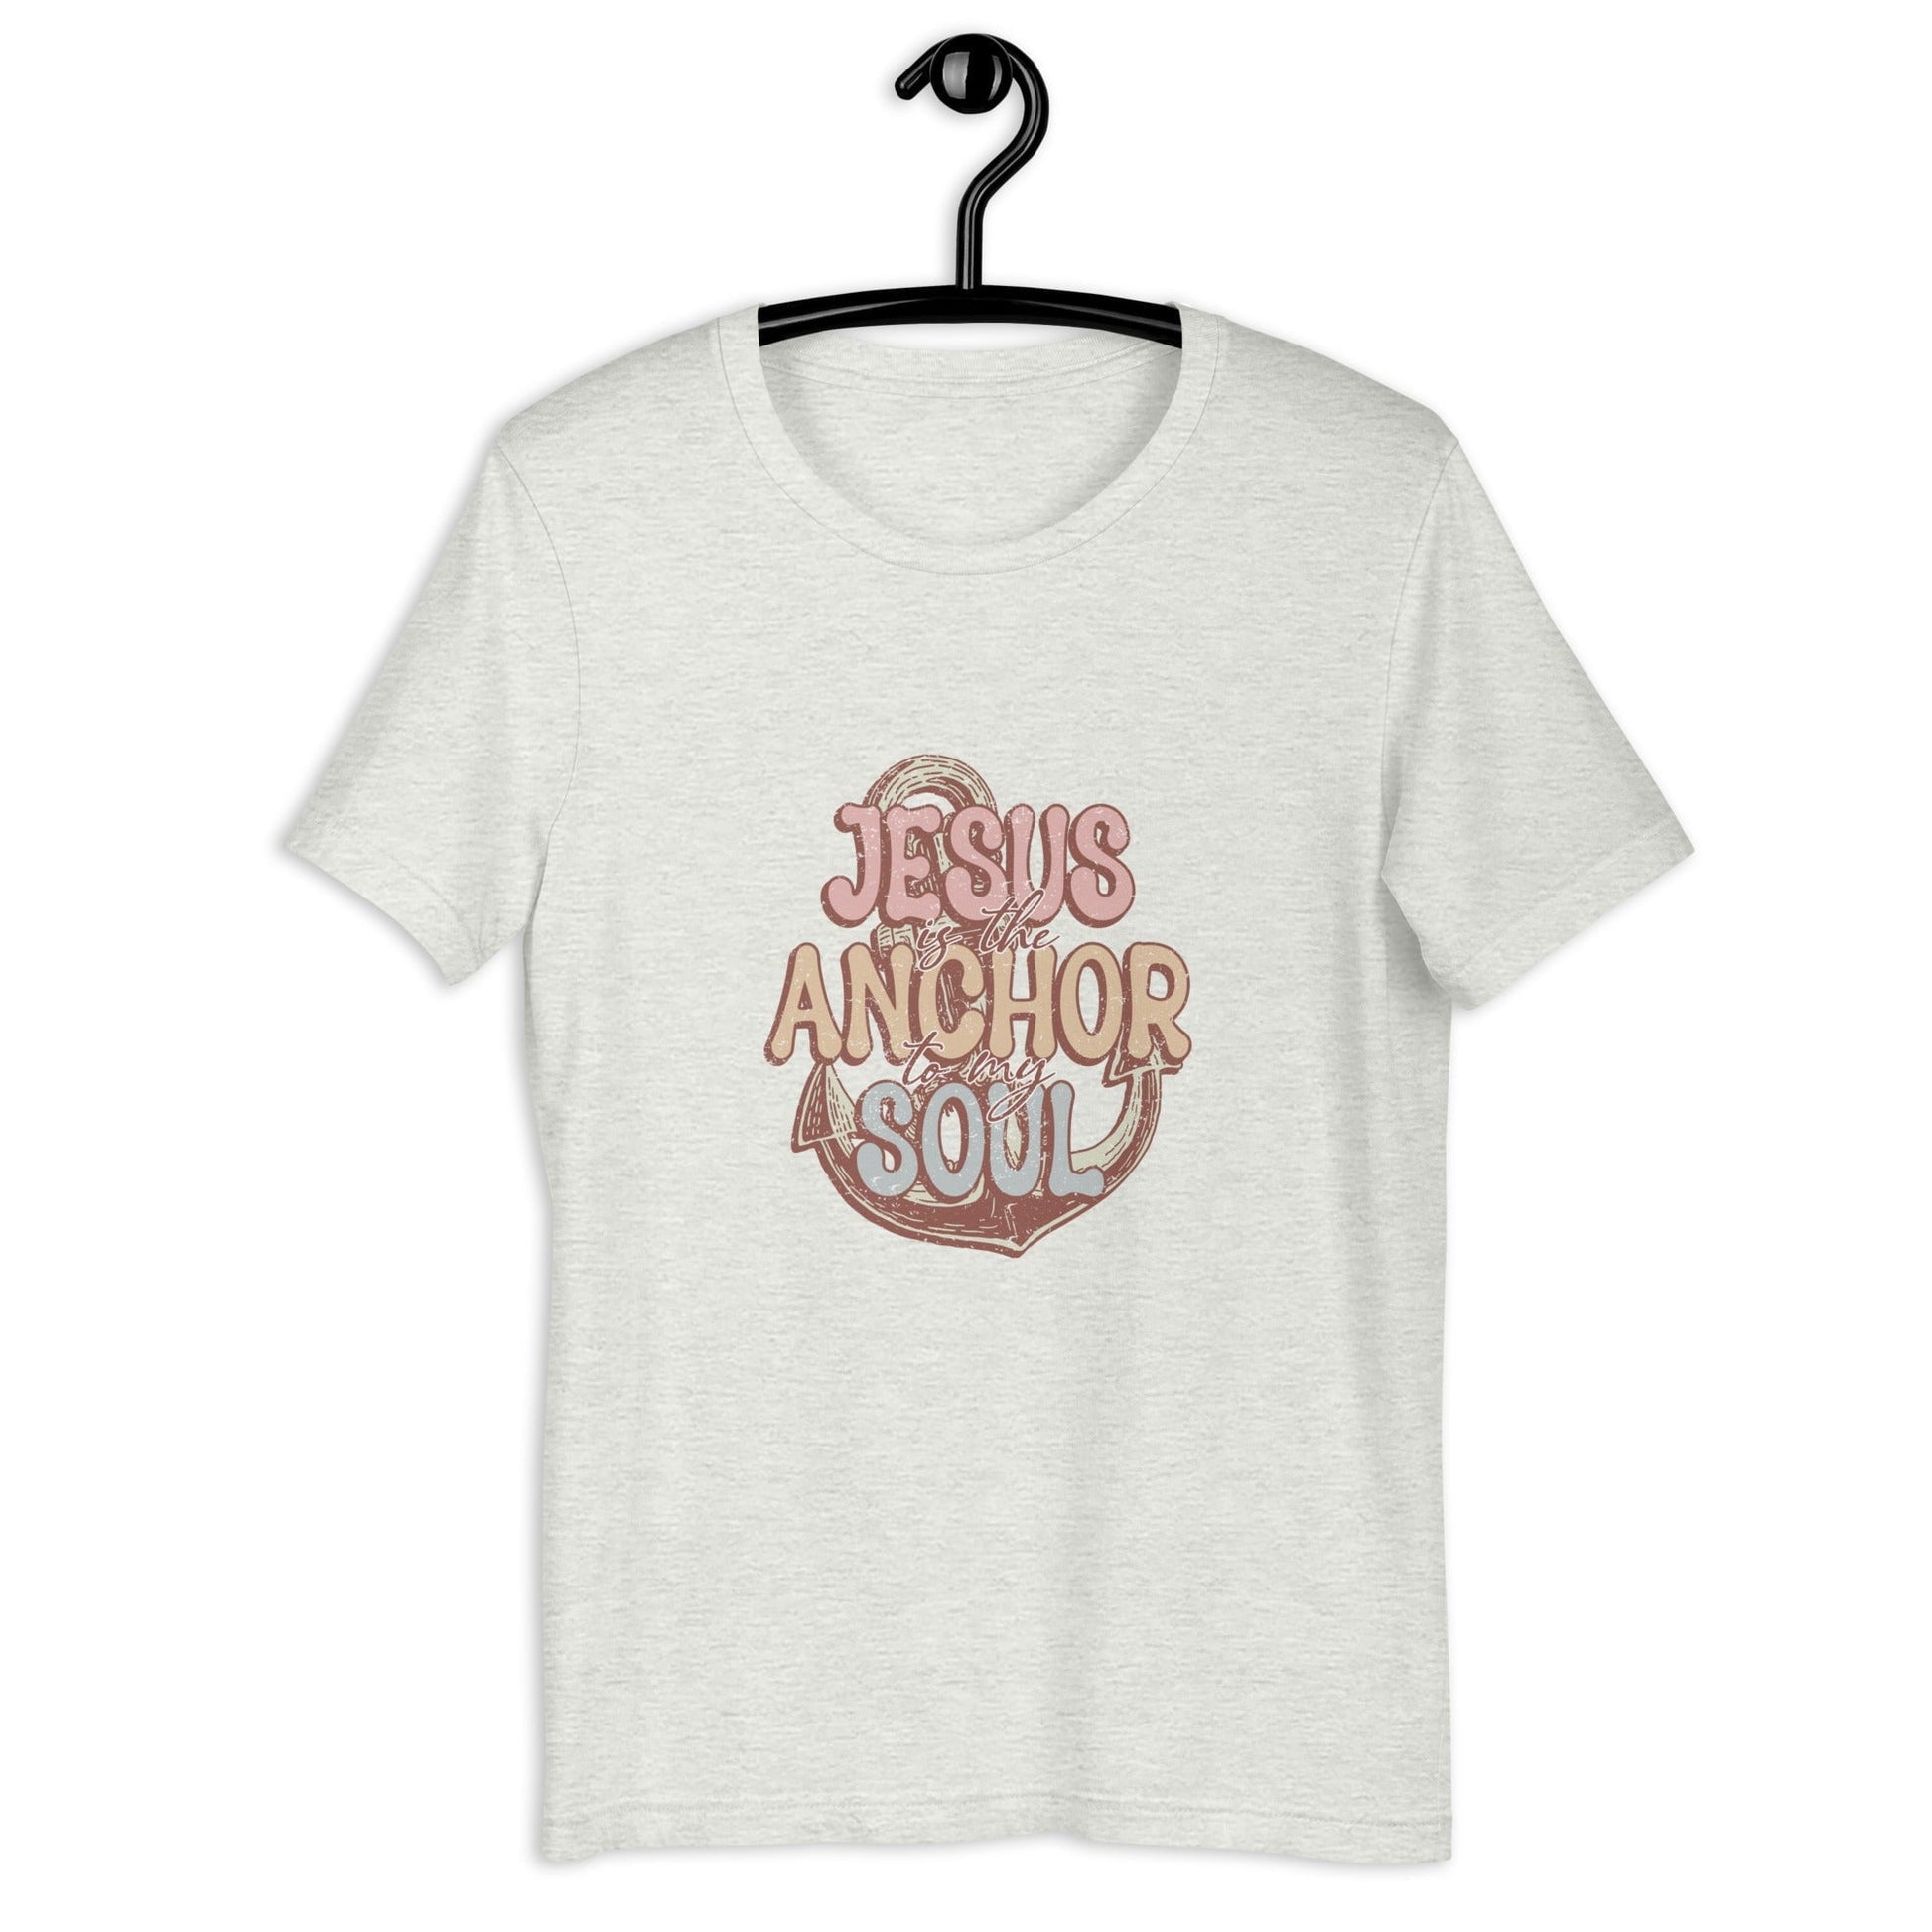 Anchor Jesus apparel t-shirt